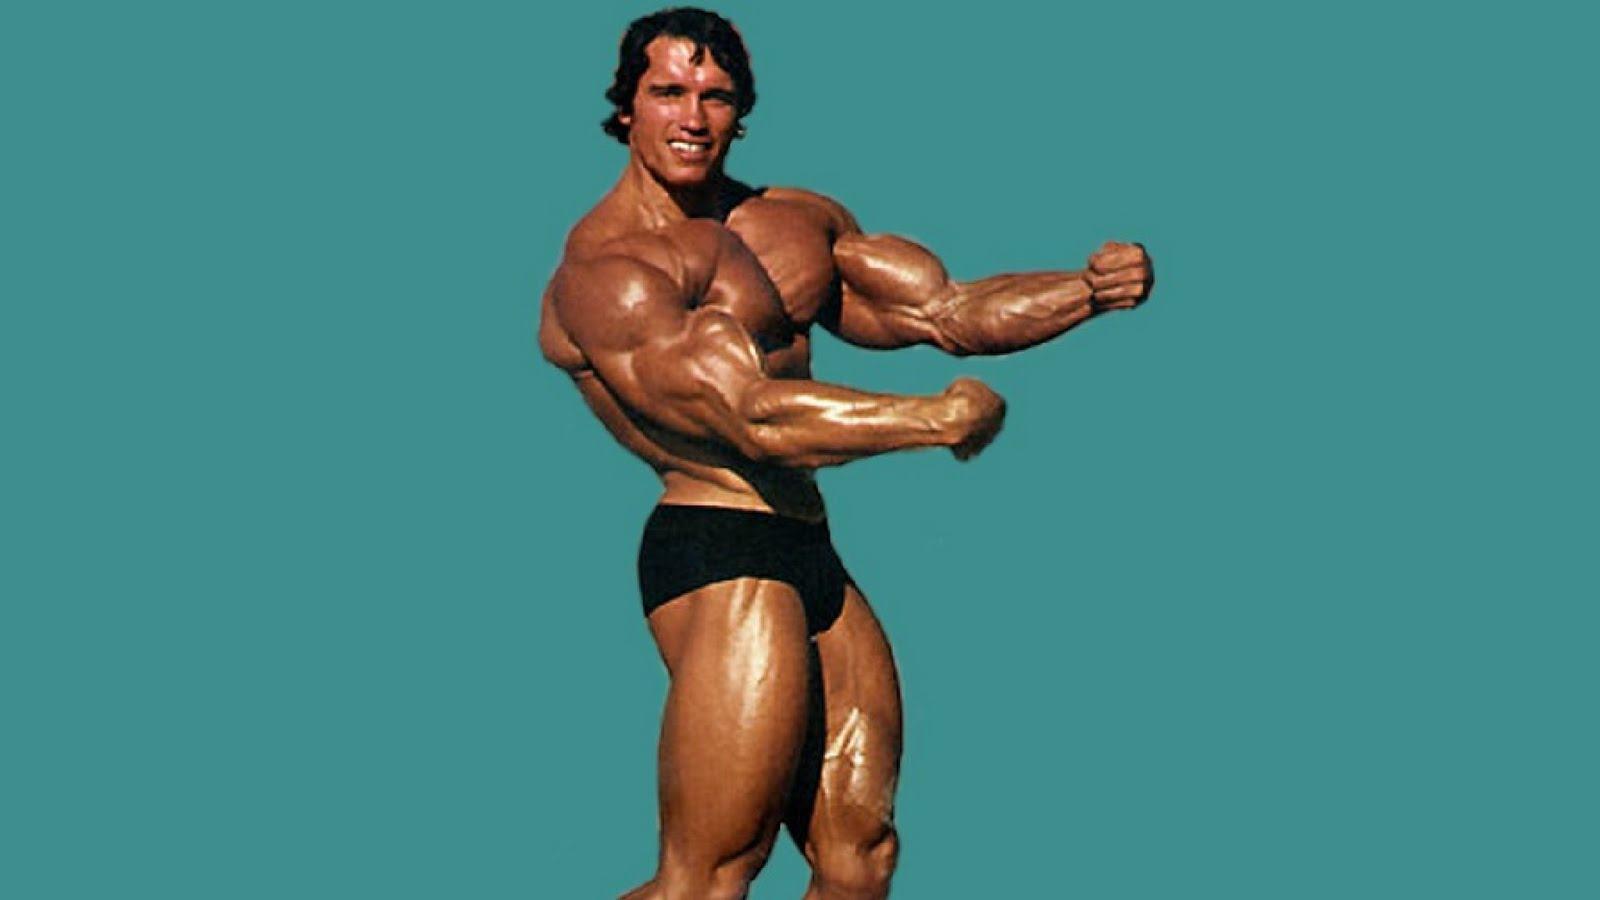 Wallpaper For > Arnold Bodybuilding Wallpaper Conquer